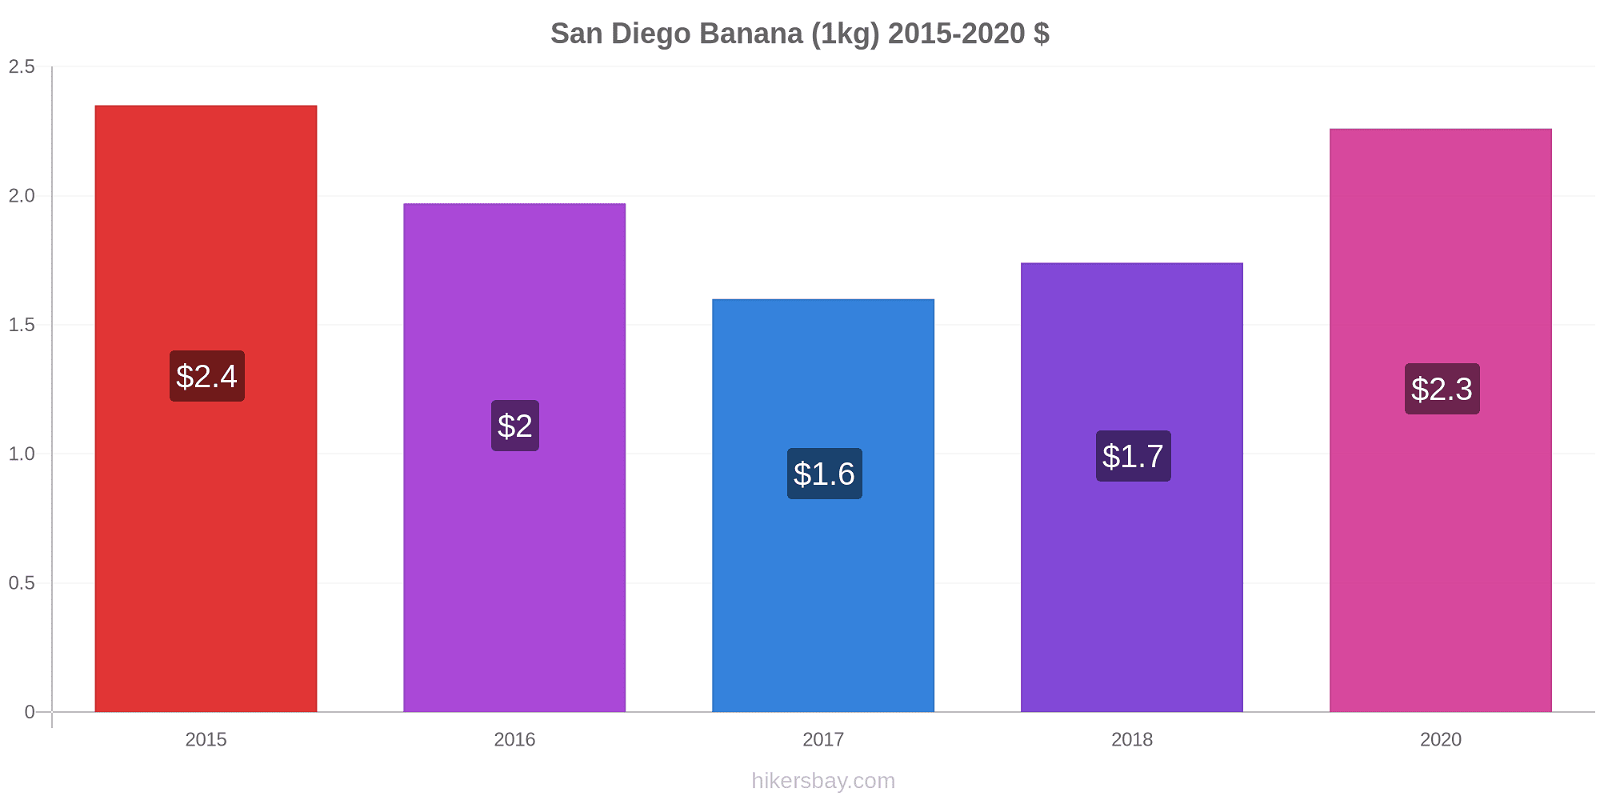 San Diego modificări de preț Banana (1kg) hikersbay.com